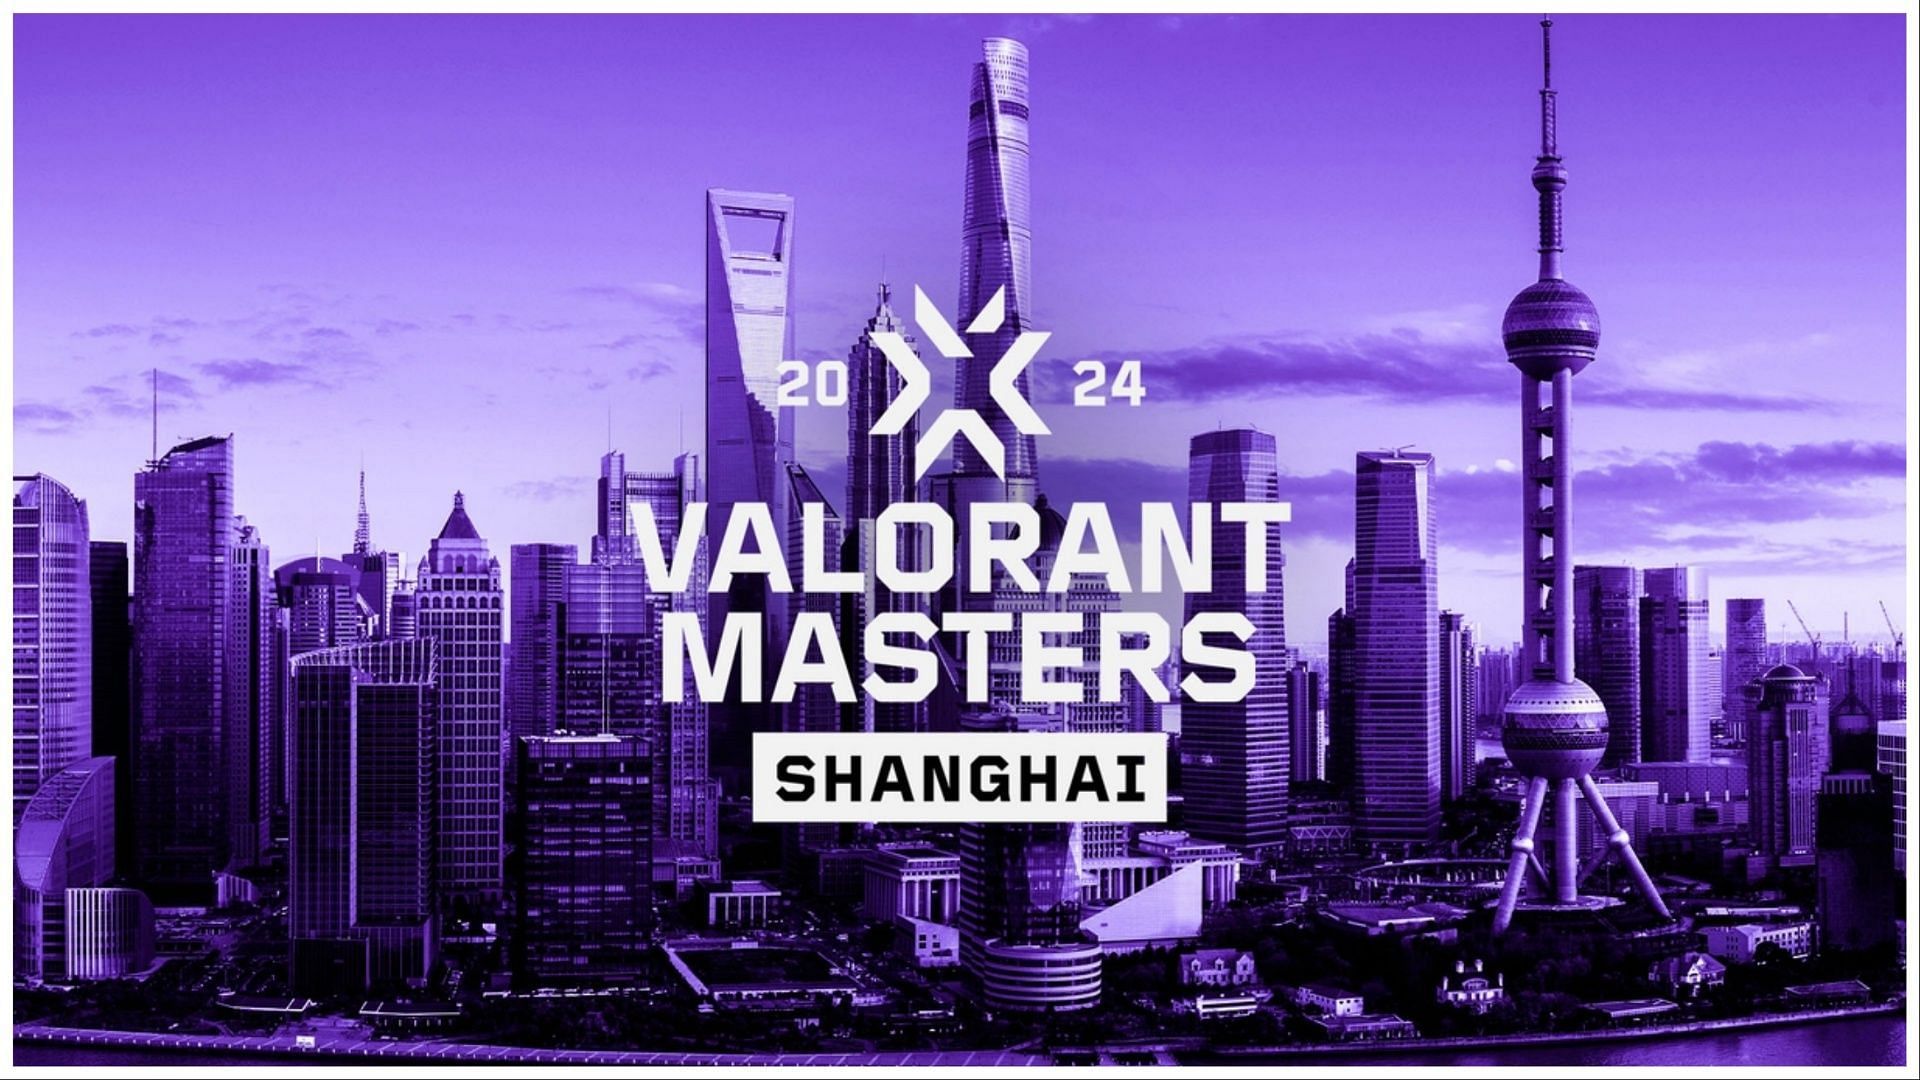 VCT Masters Shanghai teams.